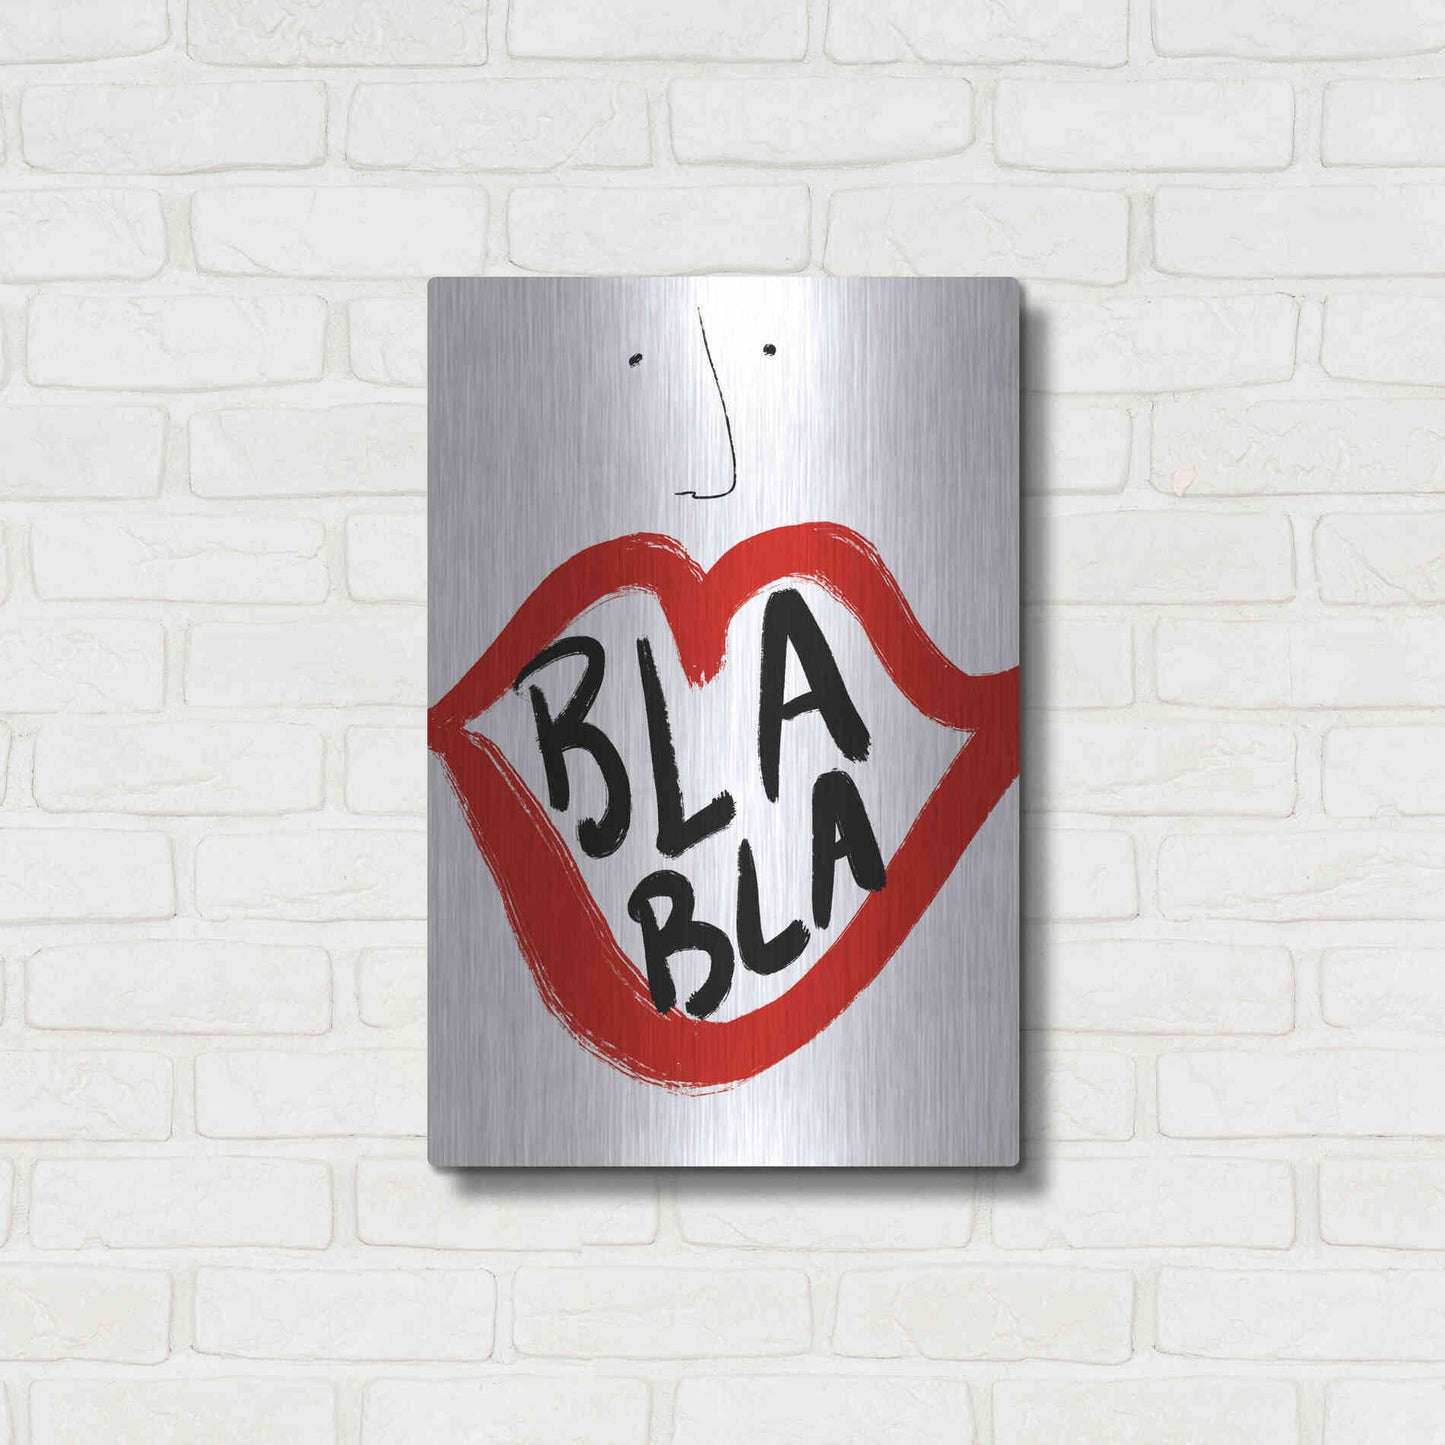 Luxe Metal Art 'Bla Bla' by Cesare Bellassai, Metal Wall Art,16x24